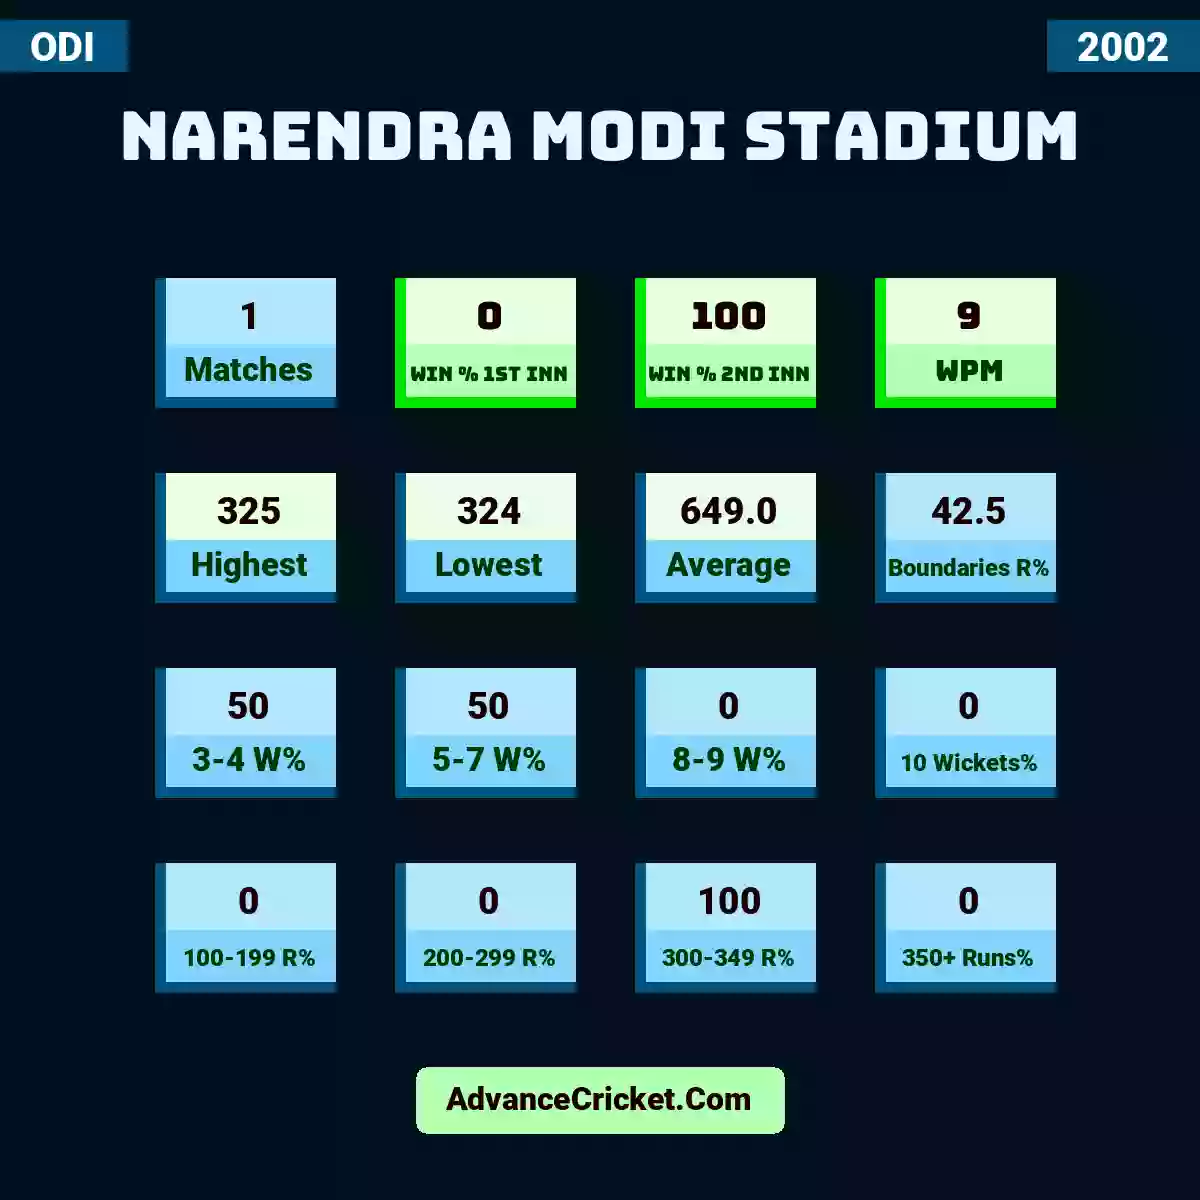 Image showing Narendra Modi Stadium with Matches: 1, Win % 1st Inn: 0, Win % 2nd Inn: 100, WPM: 9, Highest: 325, Lowest: 324, Average: 649.0, Boundaries R%: 42.5, 3-4 W%: 50, 5-7 W%: 50, 8-9 W%: 0, 10 Wickets%: 0, 100-199 R%: 0, 200-299 R%: 0, 300-349 R%: 100, 350+ Runs%: 0.